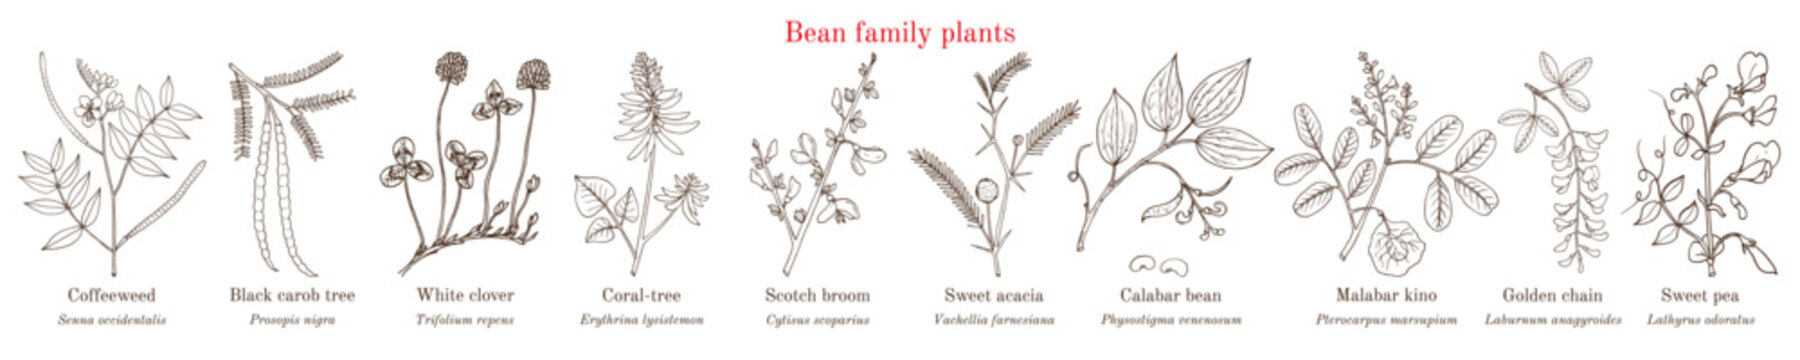 Bean family plants. (Fabaceae, Leguminosae or Papilionaceae).